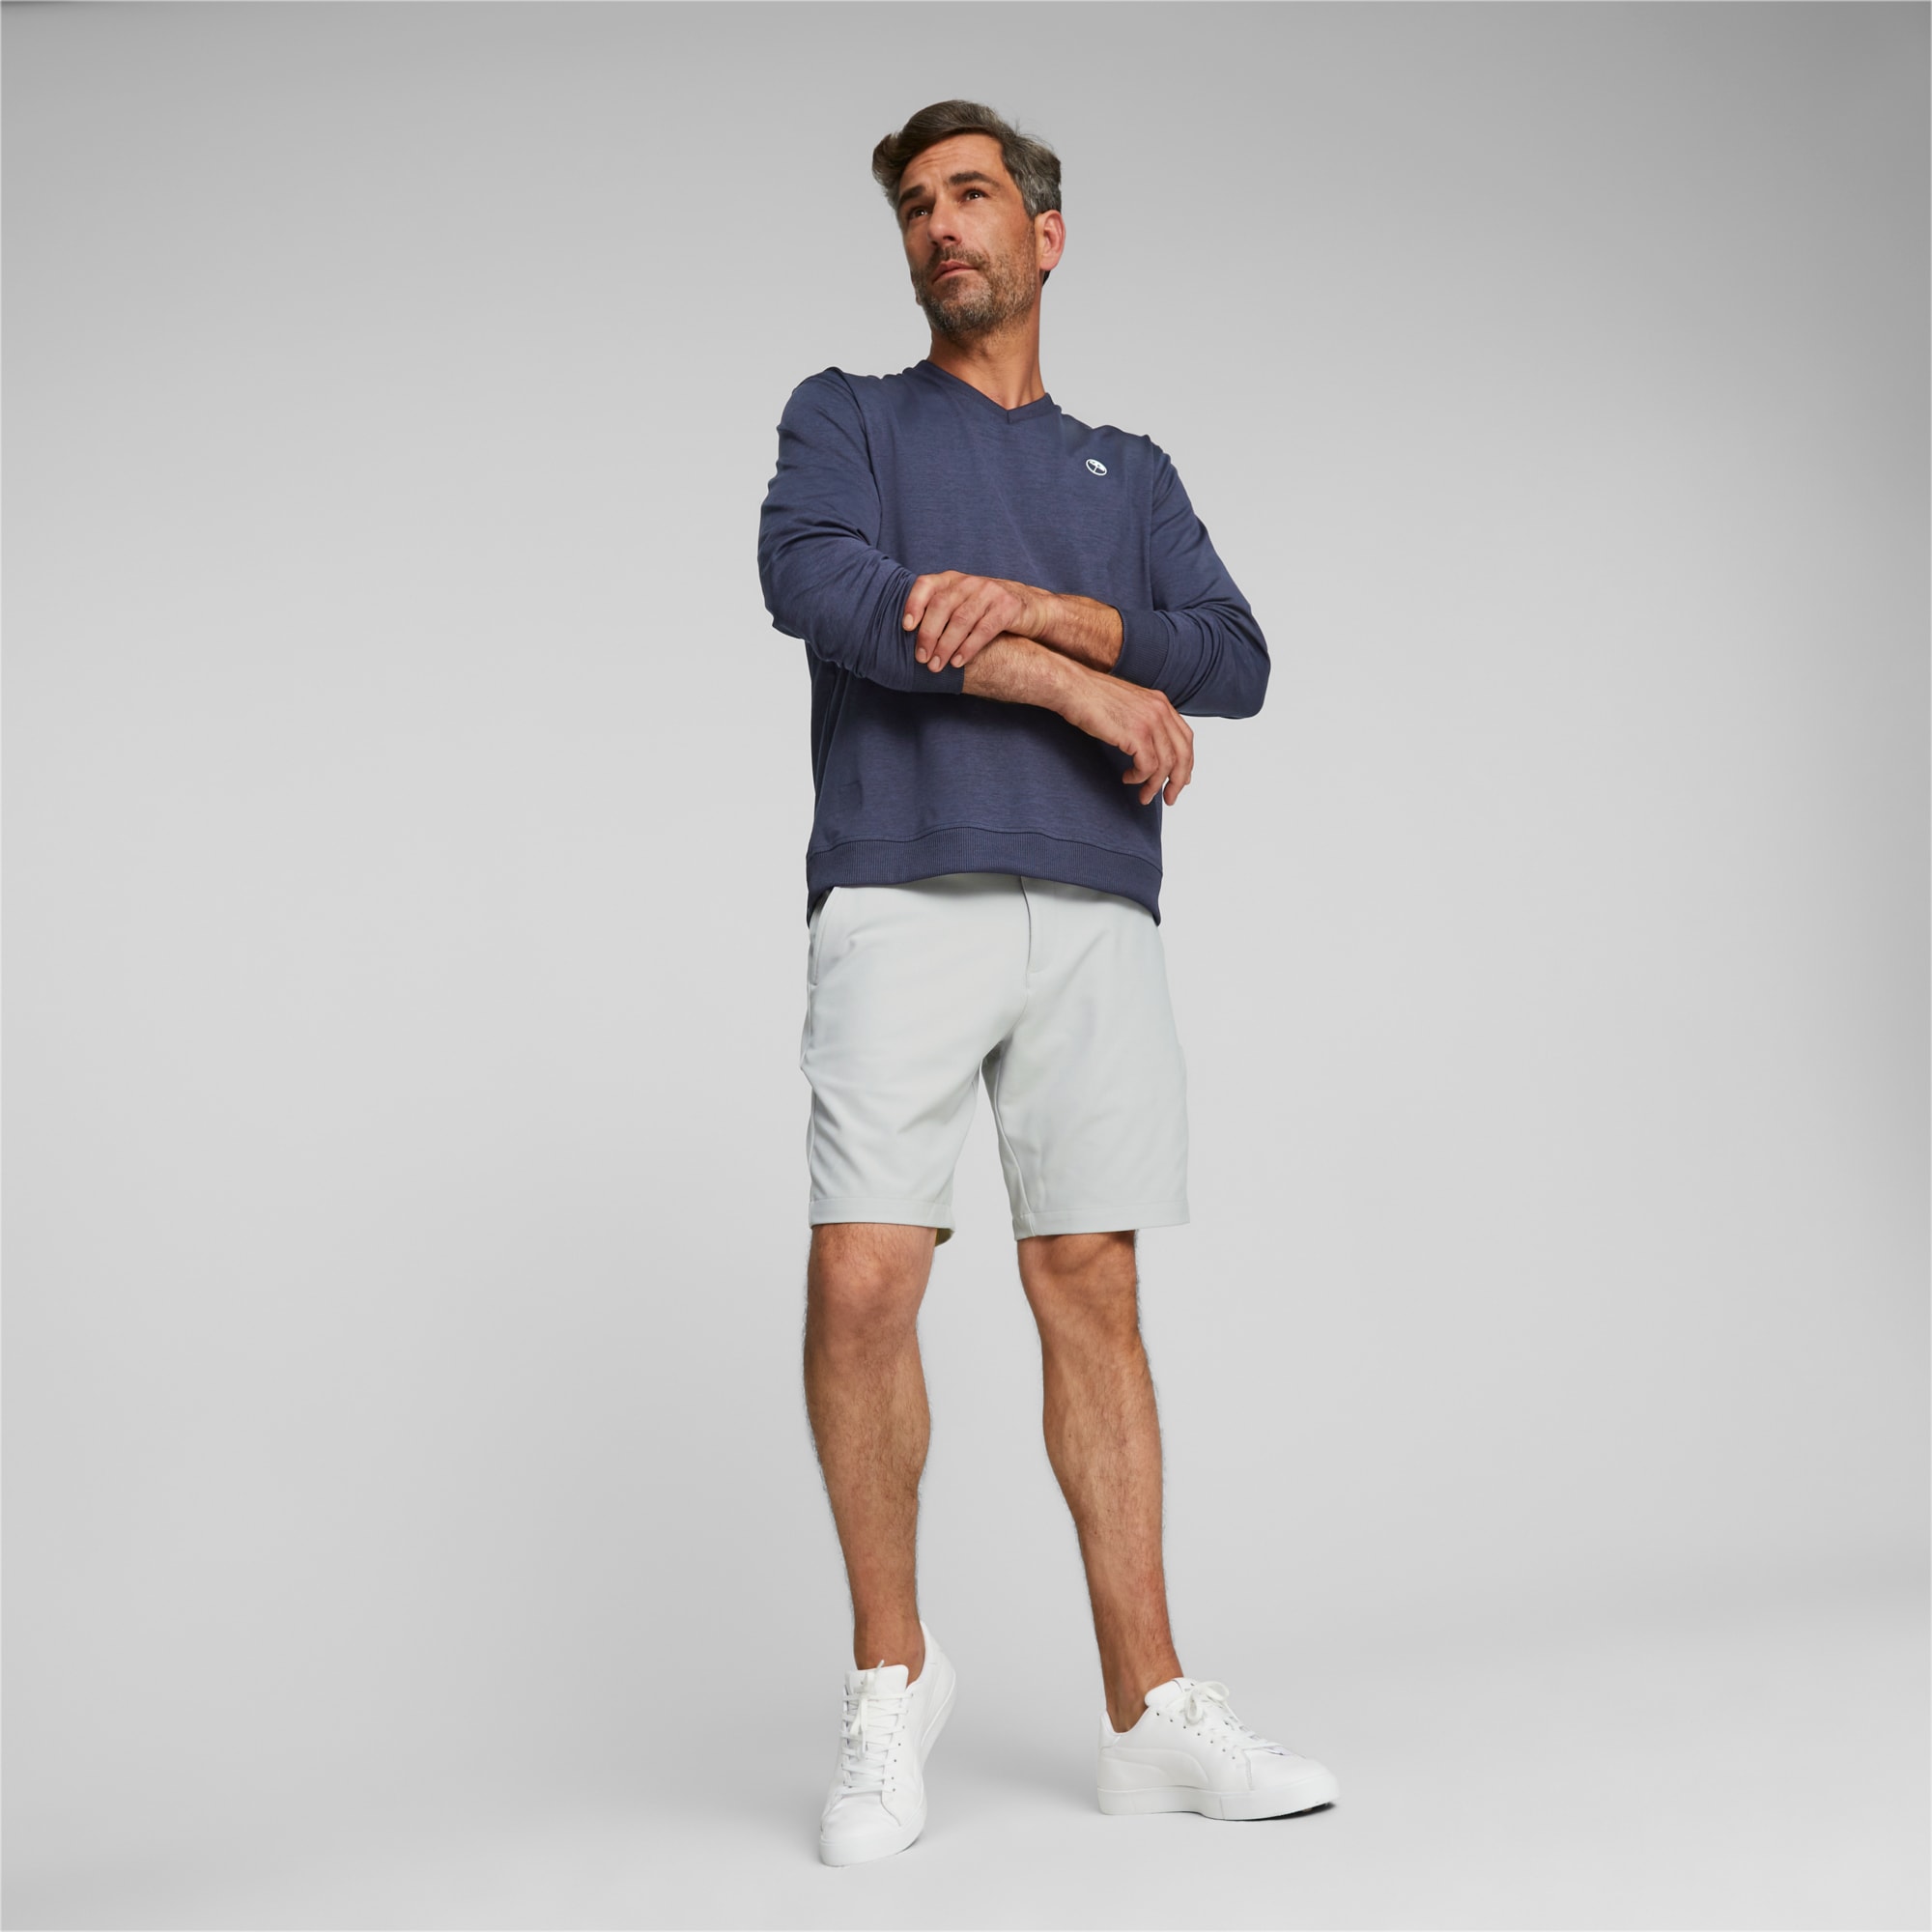 PUMA X Arnold Palmer Cloudspun V-Neck Golf Sweatshirt Men, Dark Blue, Size S, Clothing